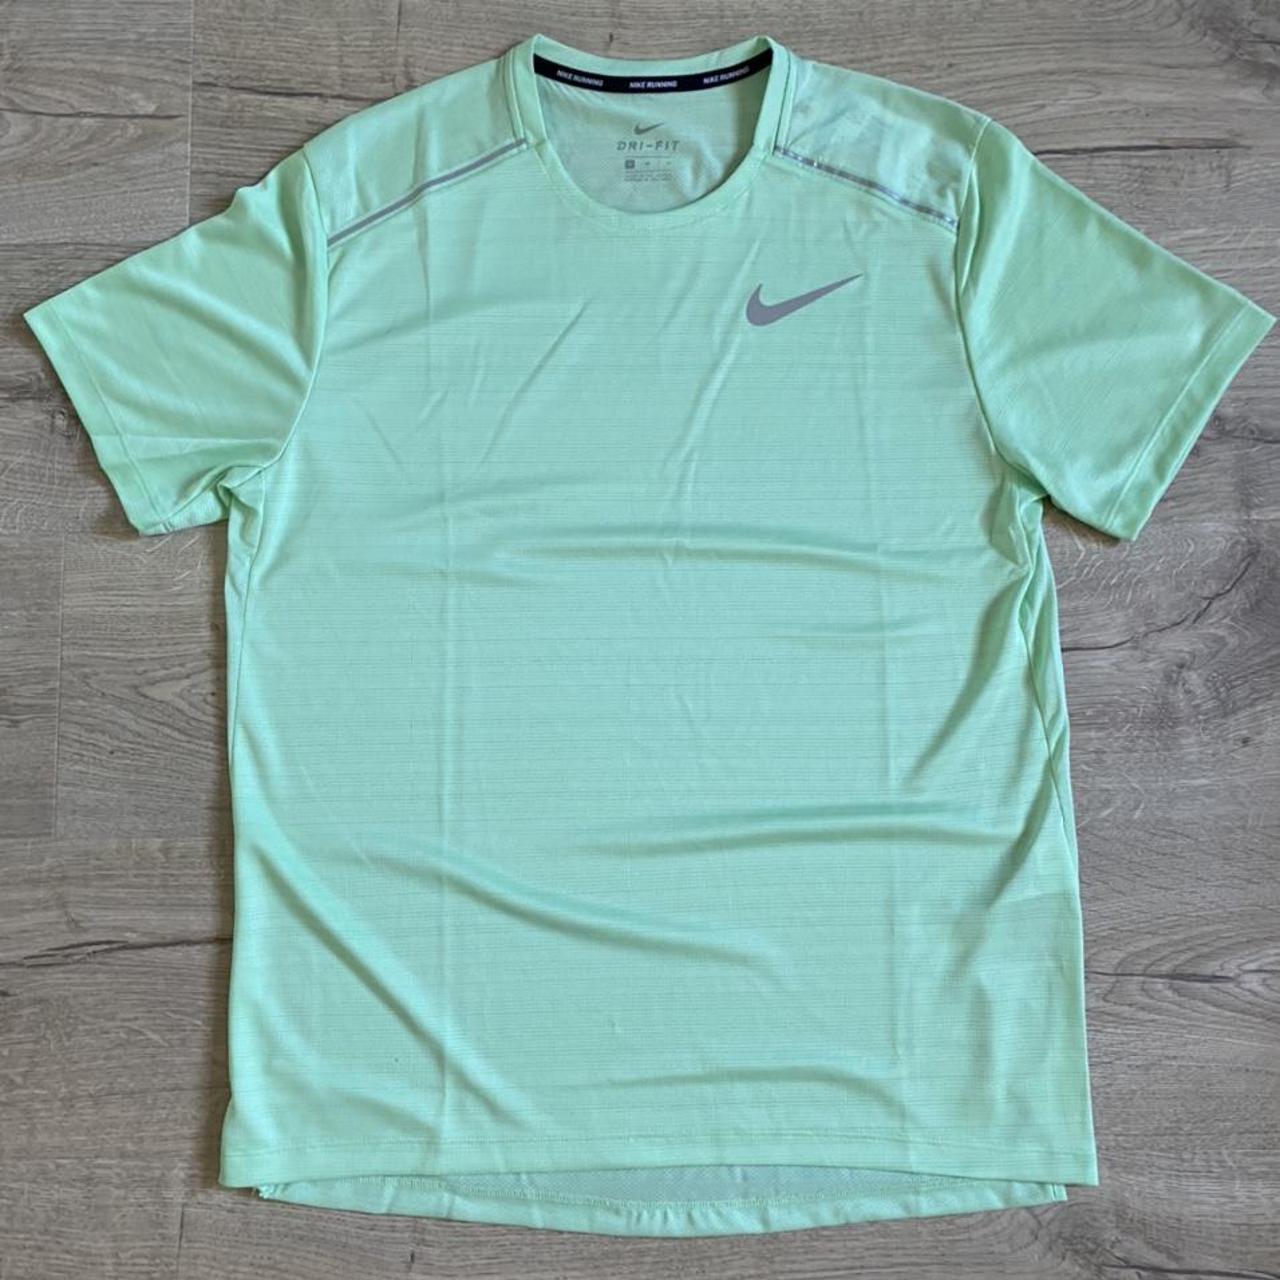 Product Image 1 - Nike Teal Running T Shirt
Item